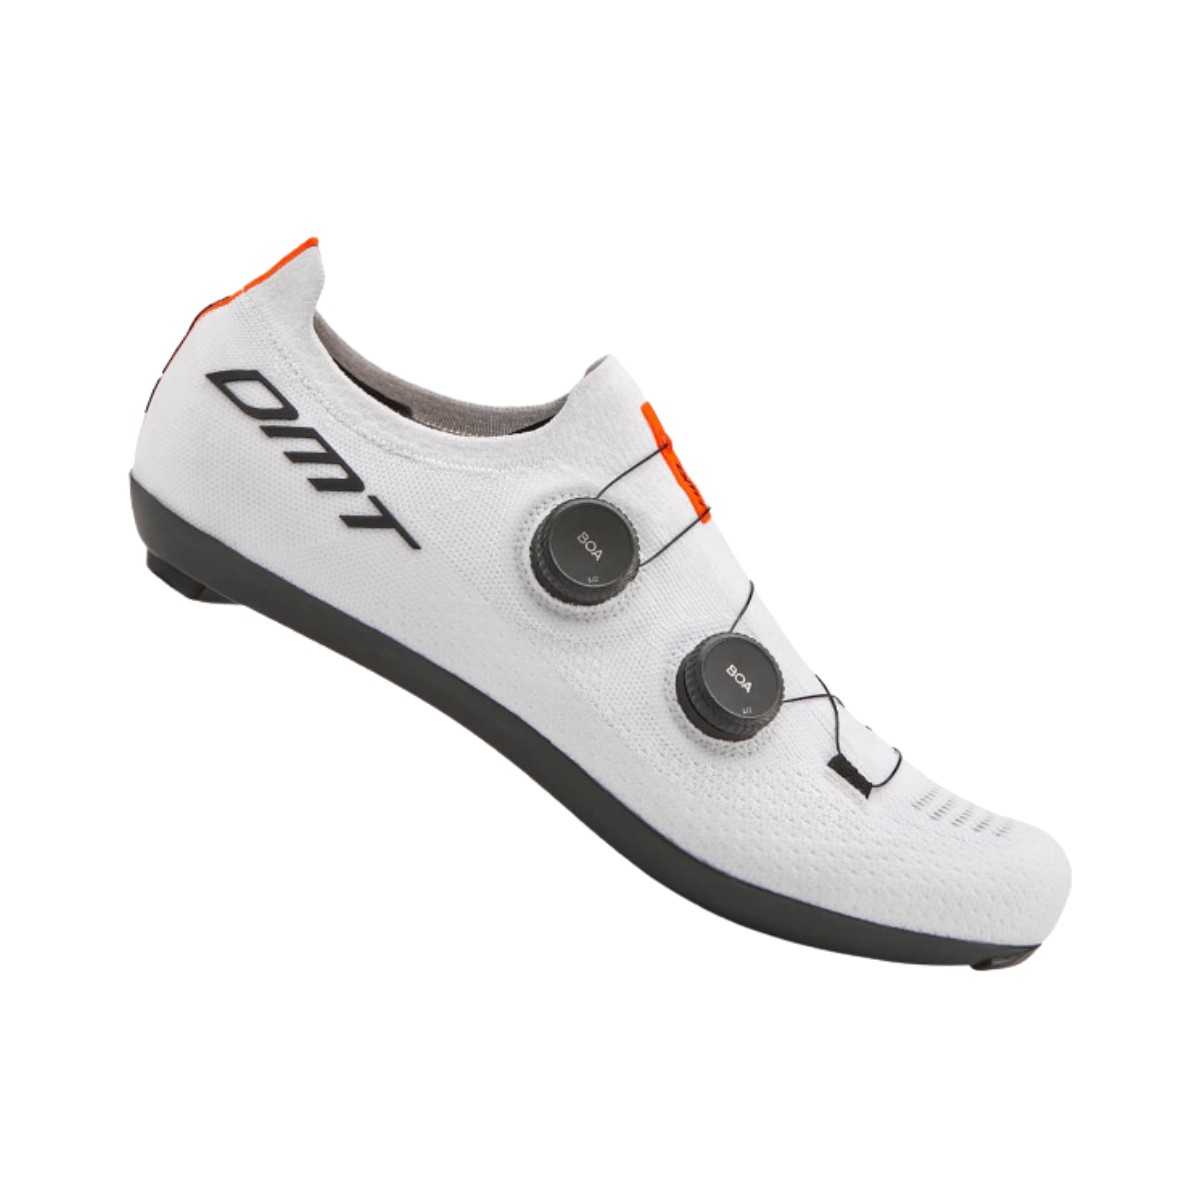 DMT KR0 Shoes White AW22, Size 41 - EUR